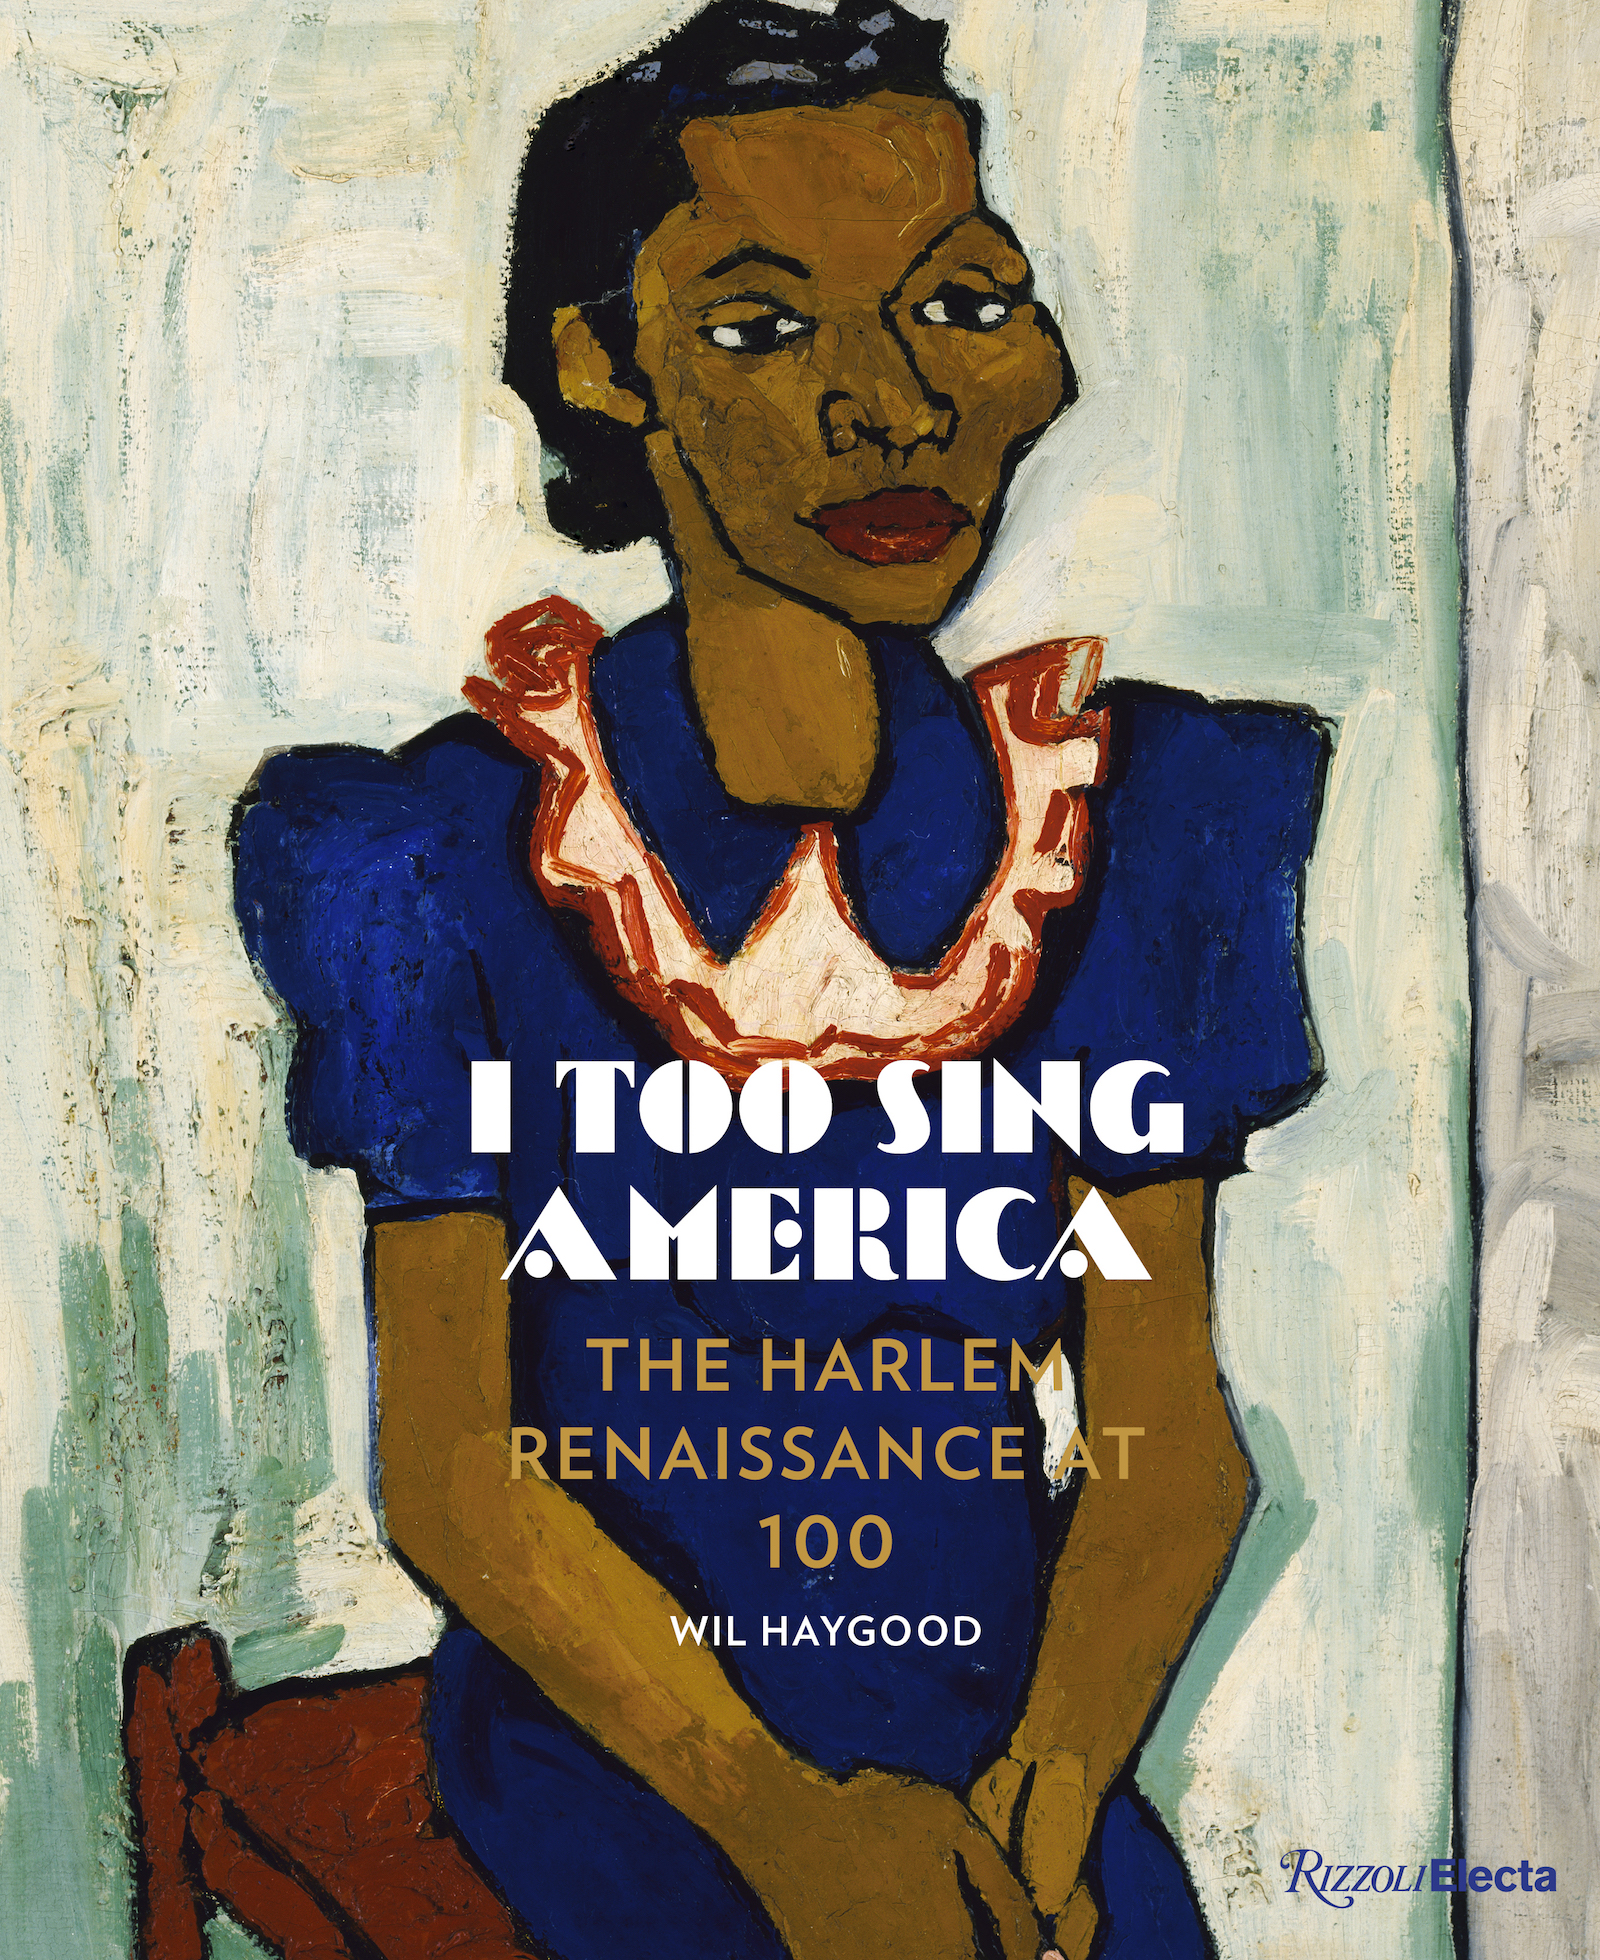 Book cover, "I Too Sing America"